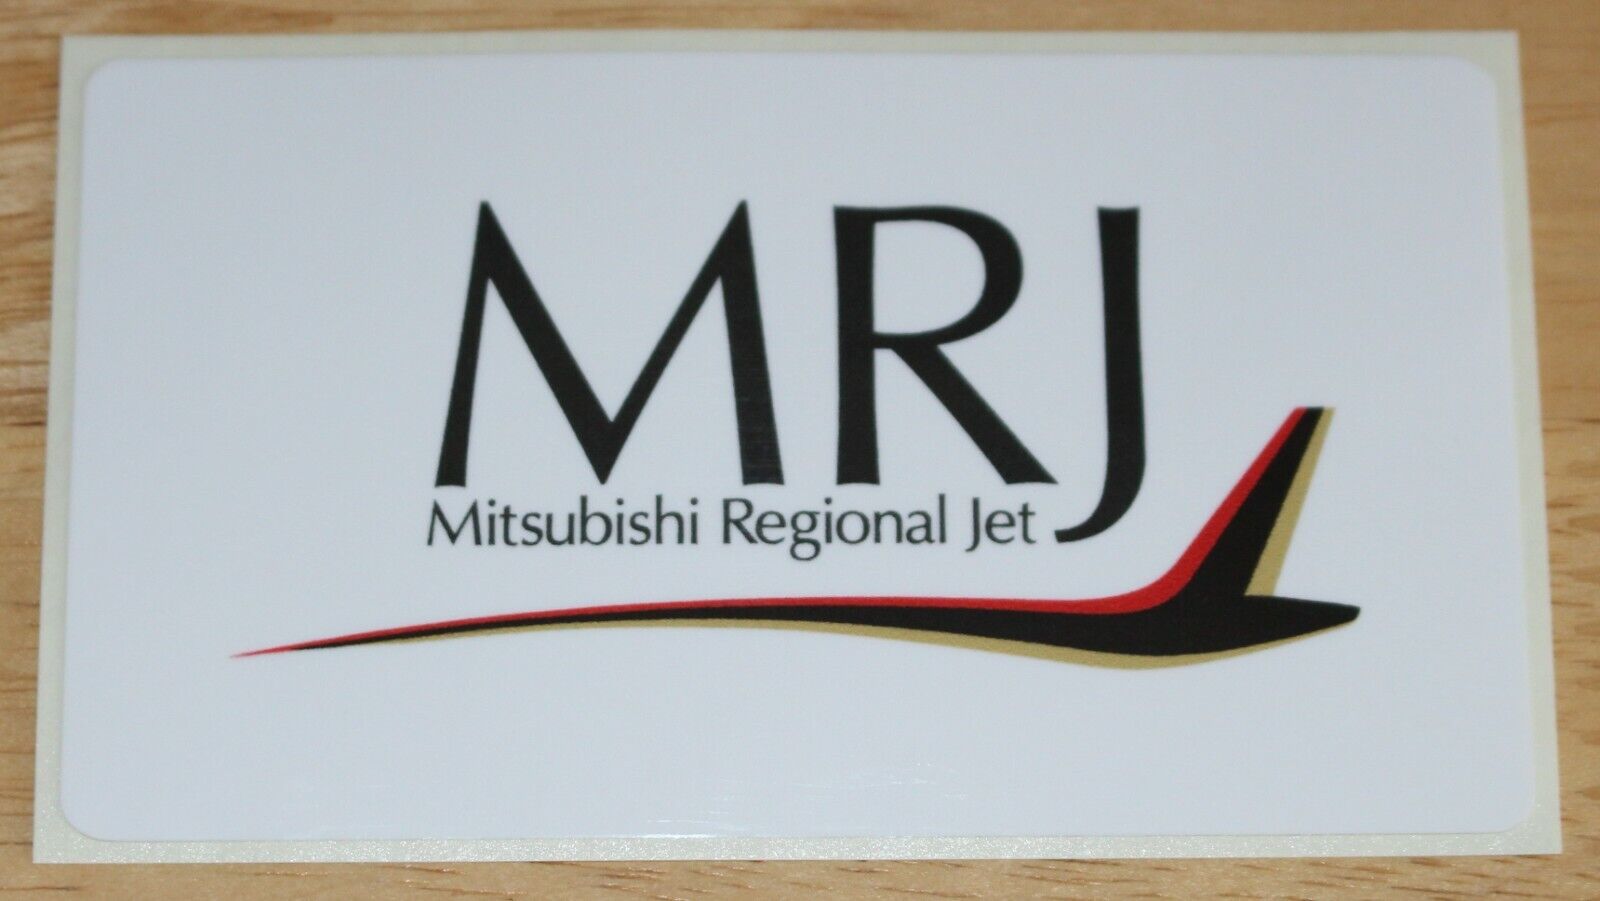 MRJ Mitsubishi Regional Jet Japan (Now named SpaceJet) Sticker Version 2